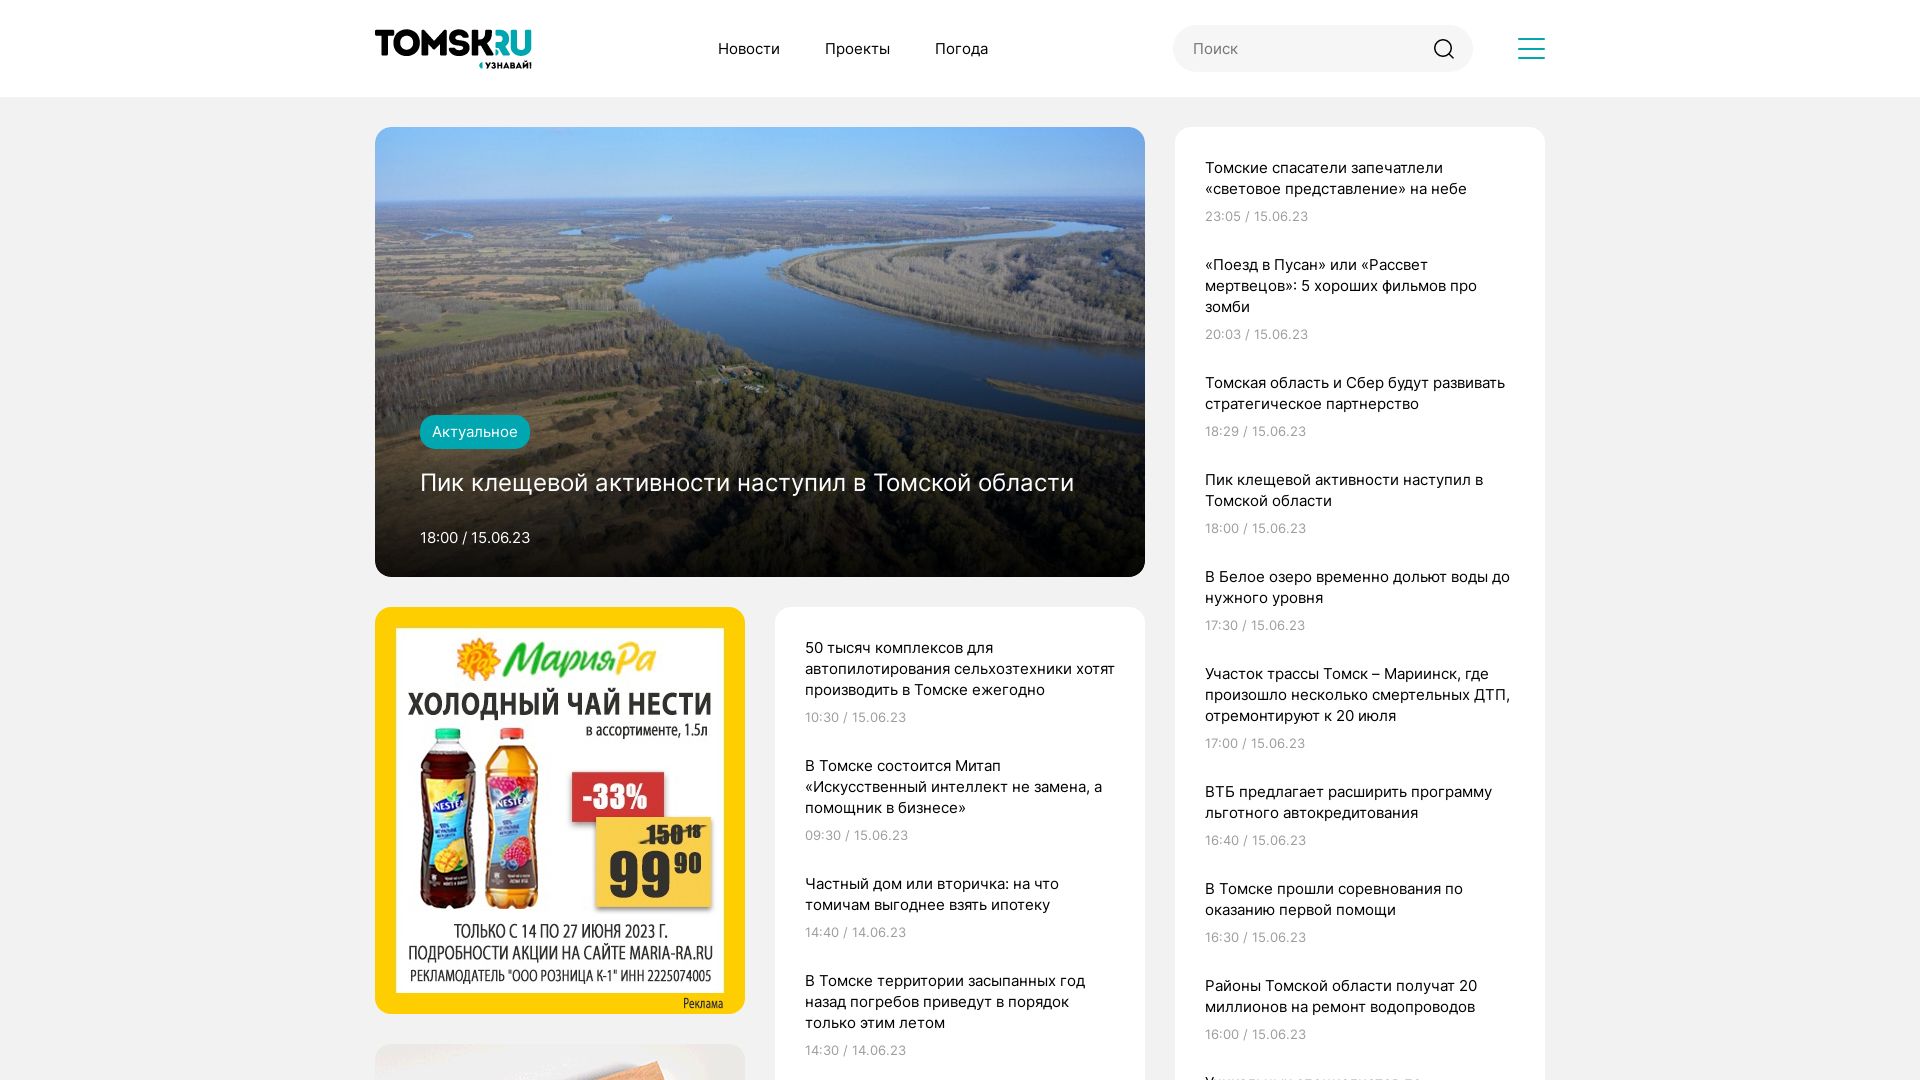 Webseitenstatus tomsk.ru ist   ONLINE